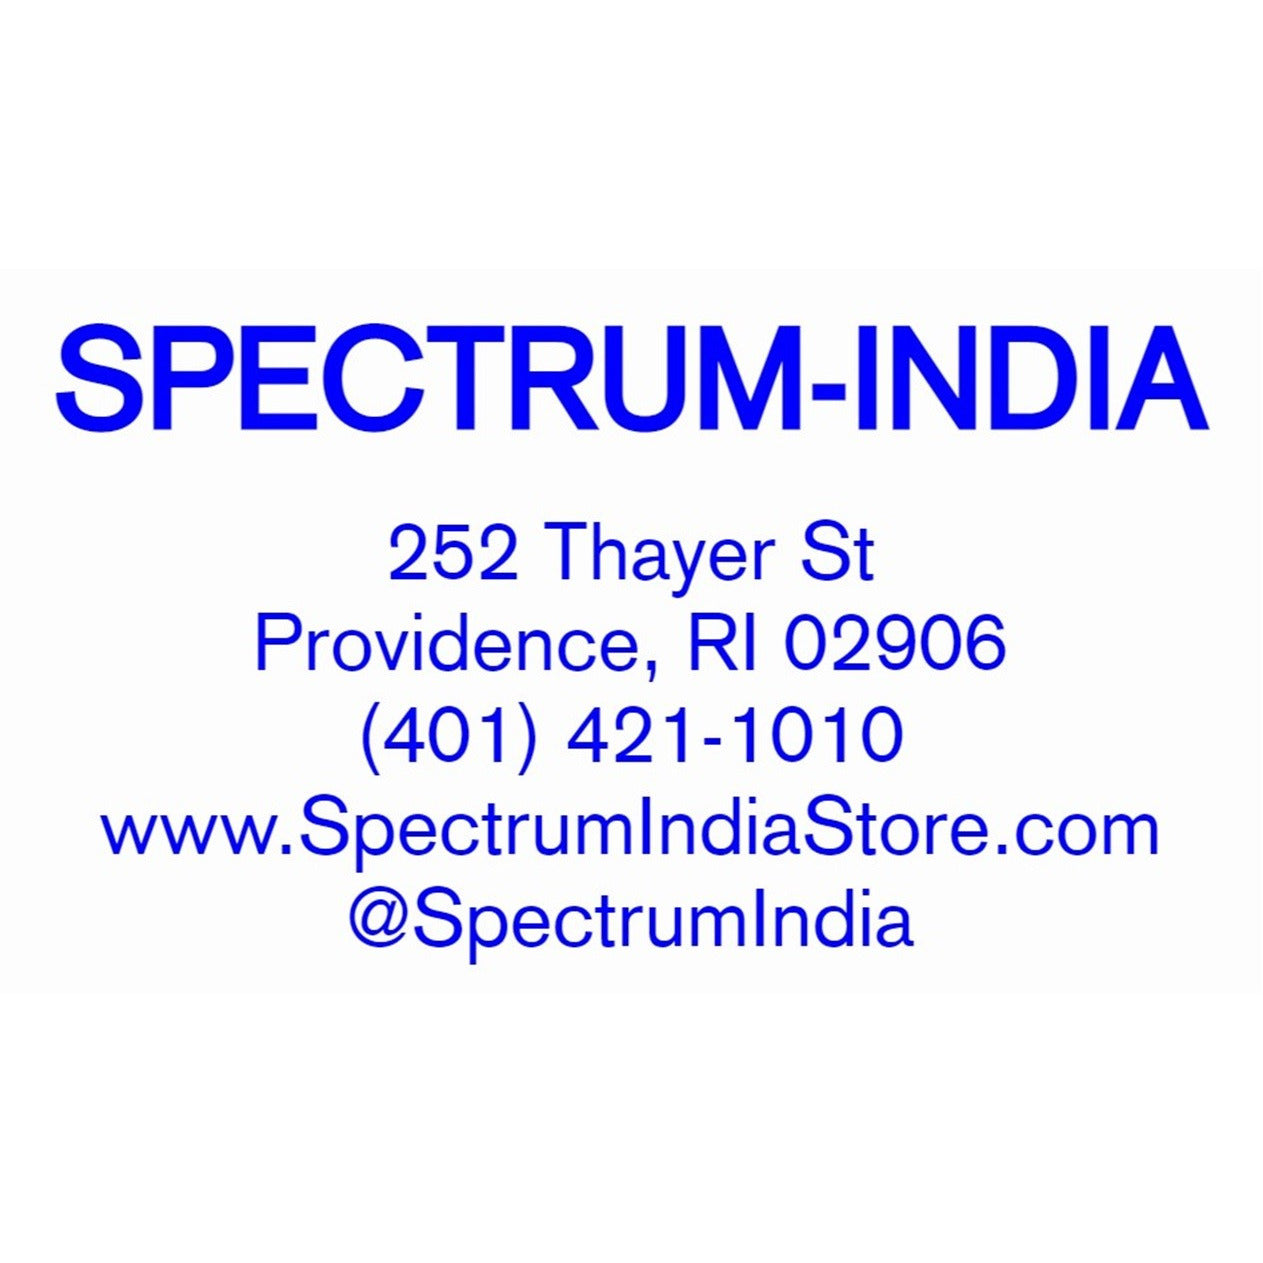 SPECTRUM-INDIA Gift Card/Certificate